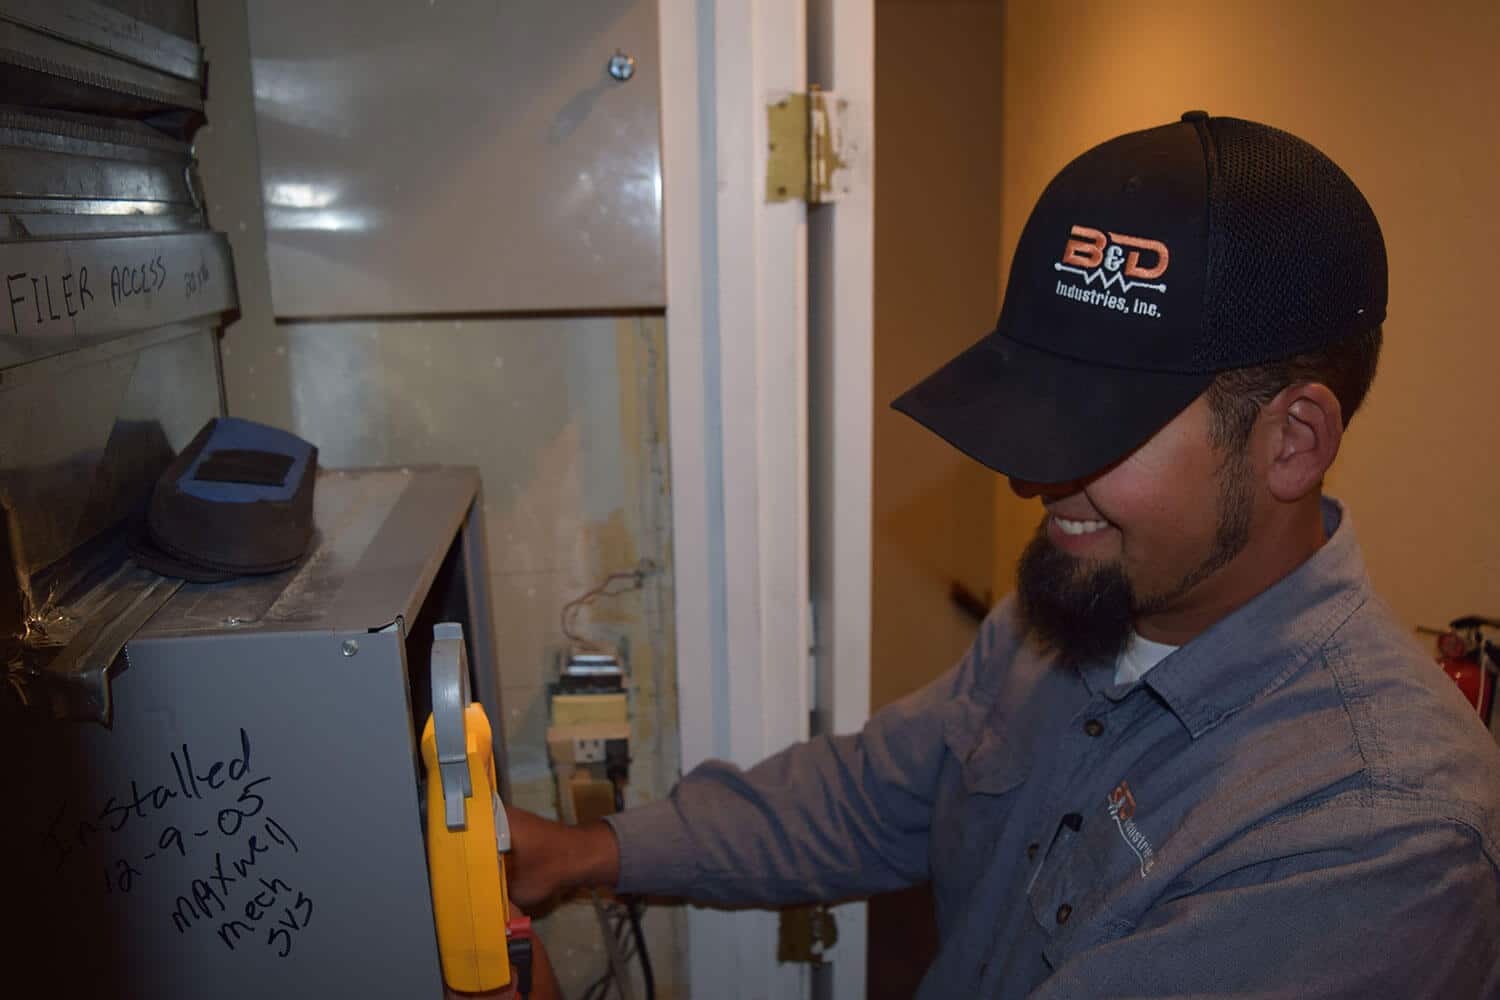 B&D electrical repair technician checking a home circuit breaker